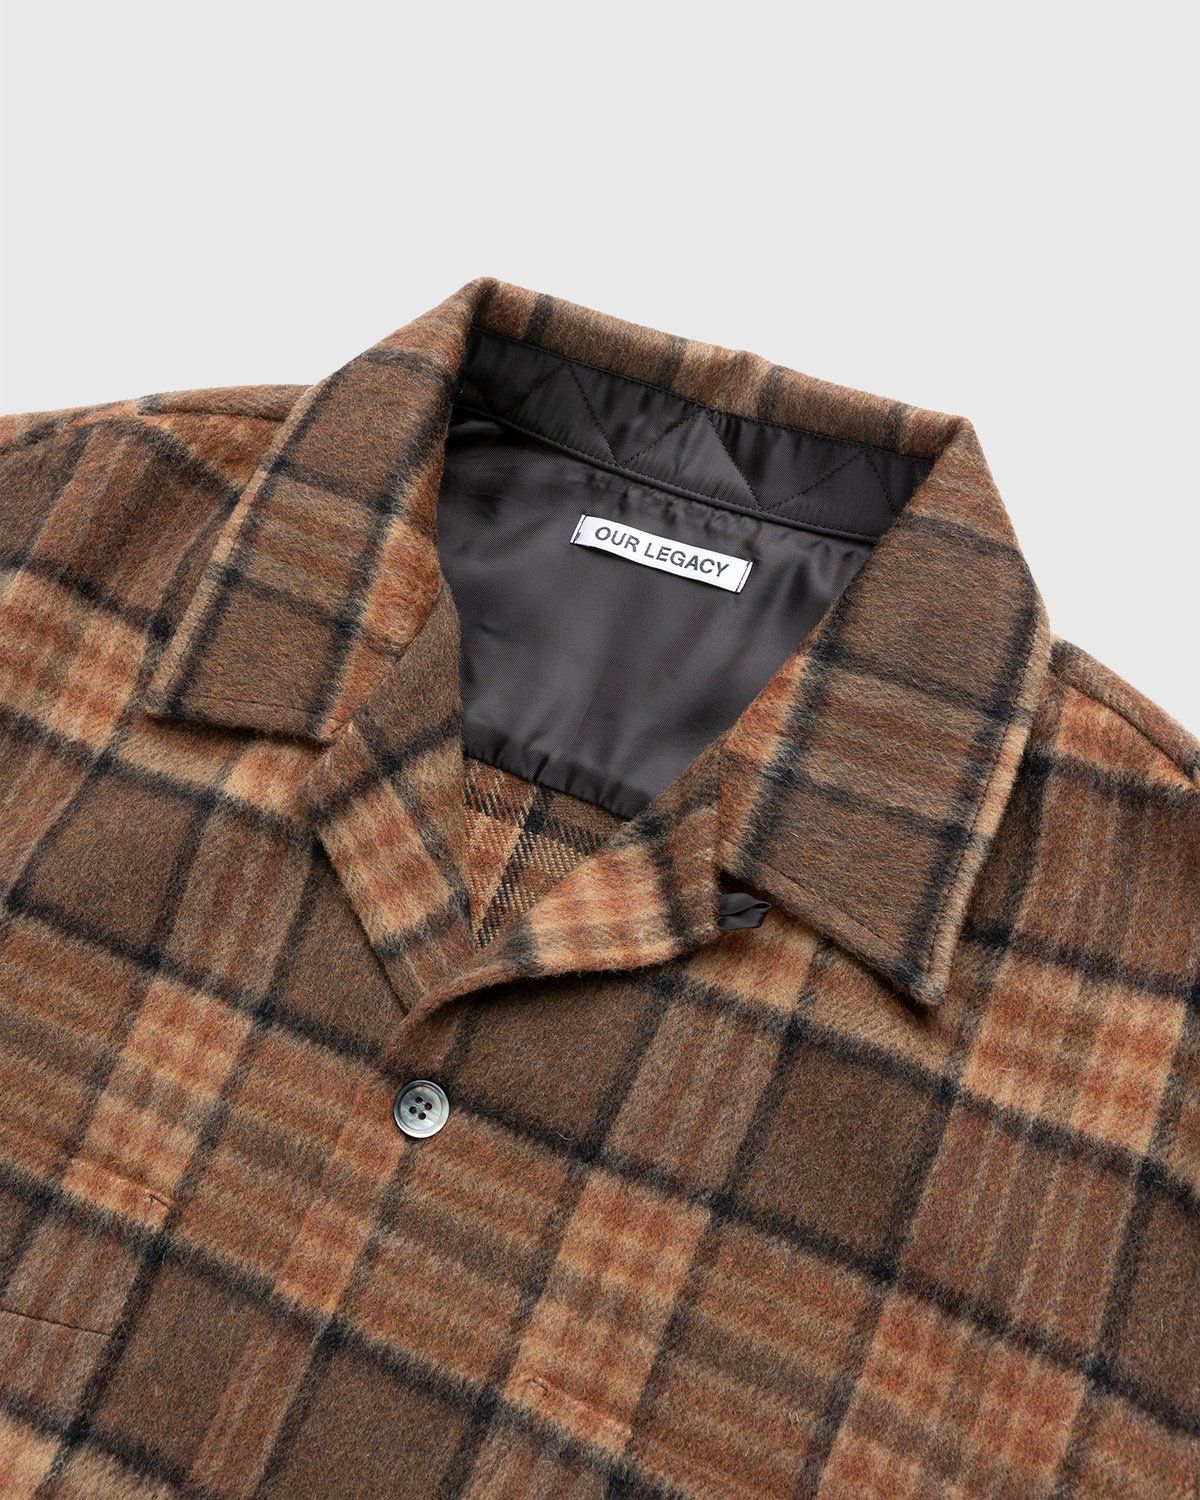 Our Legacy – Heusen Shirt Fox Brown Check | Highsnobiety Shop